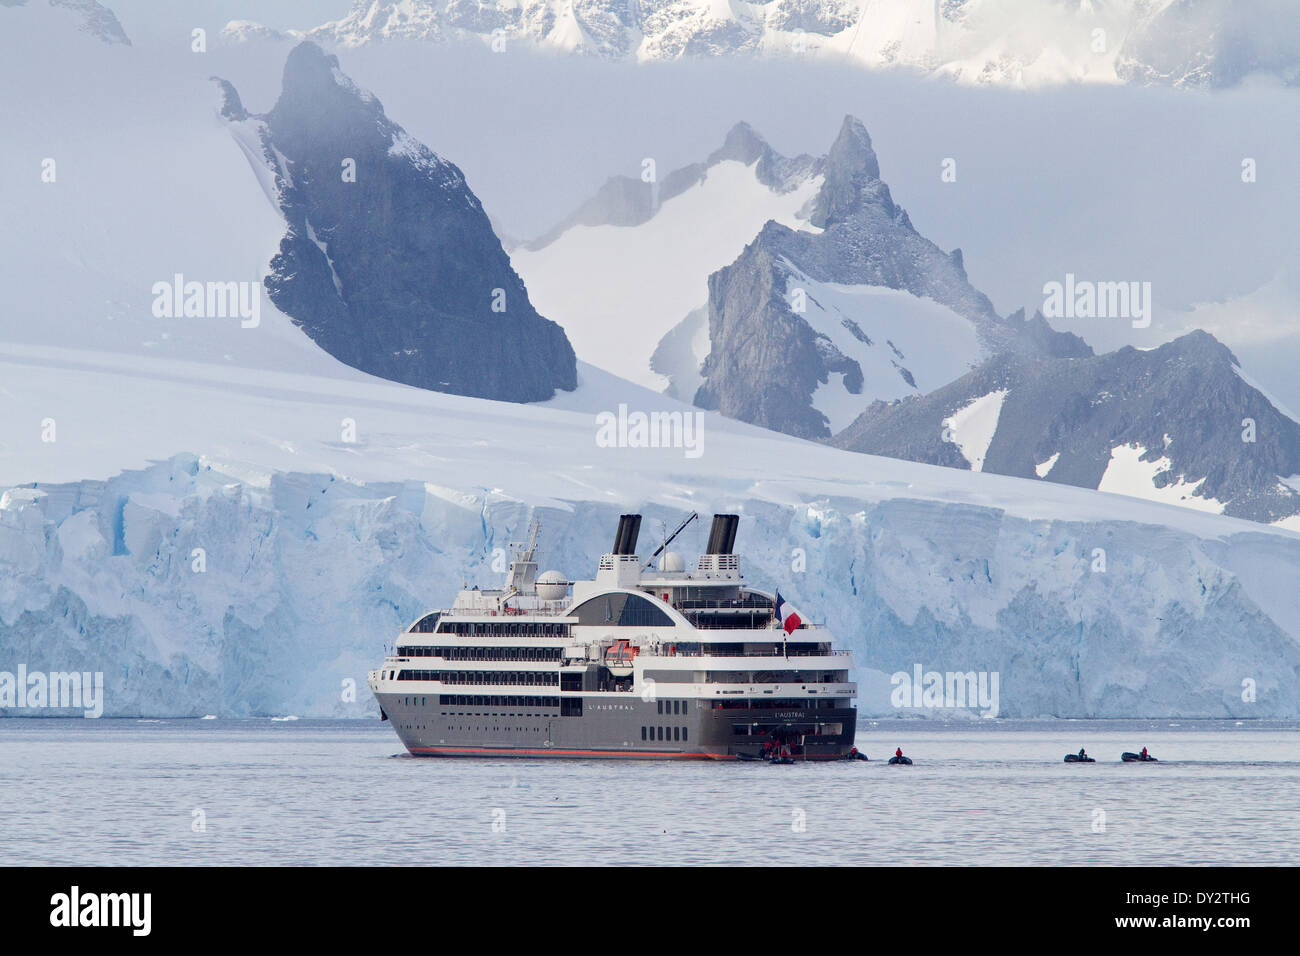 Antarctica cruise ship Antarctica tourism with tourists, L'Austral, and Zodiac among glacier, mountains, mountain, Antarctic Peninsula. Stock Photo